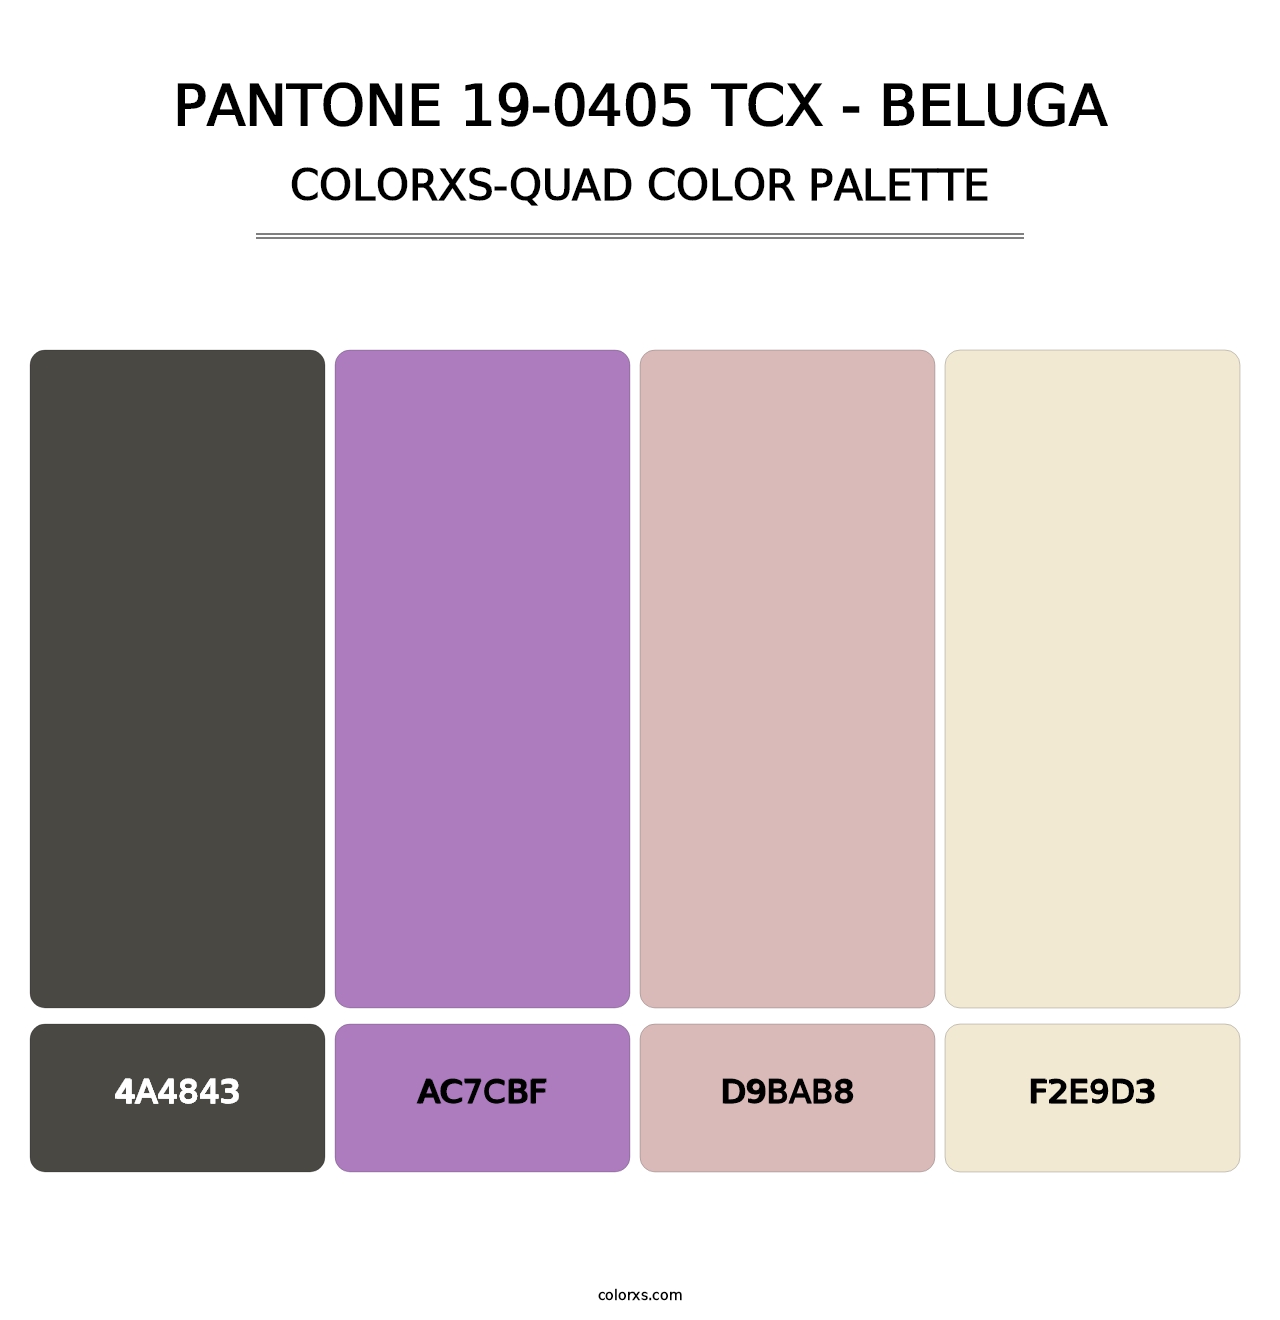 PANTONE 19-0405 TCX - Beluga - Colorxs Quad Palette